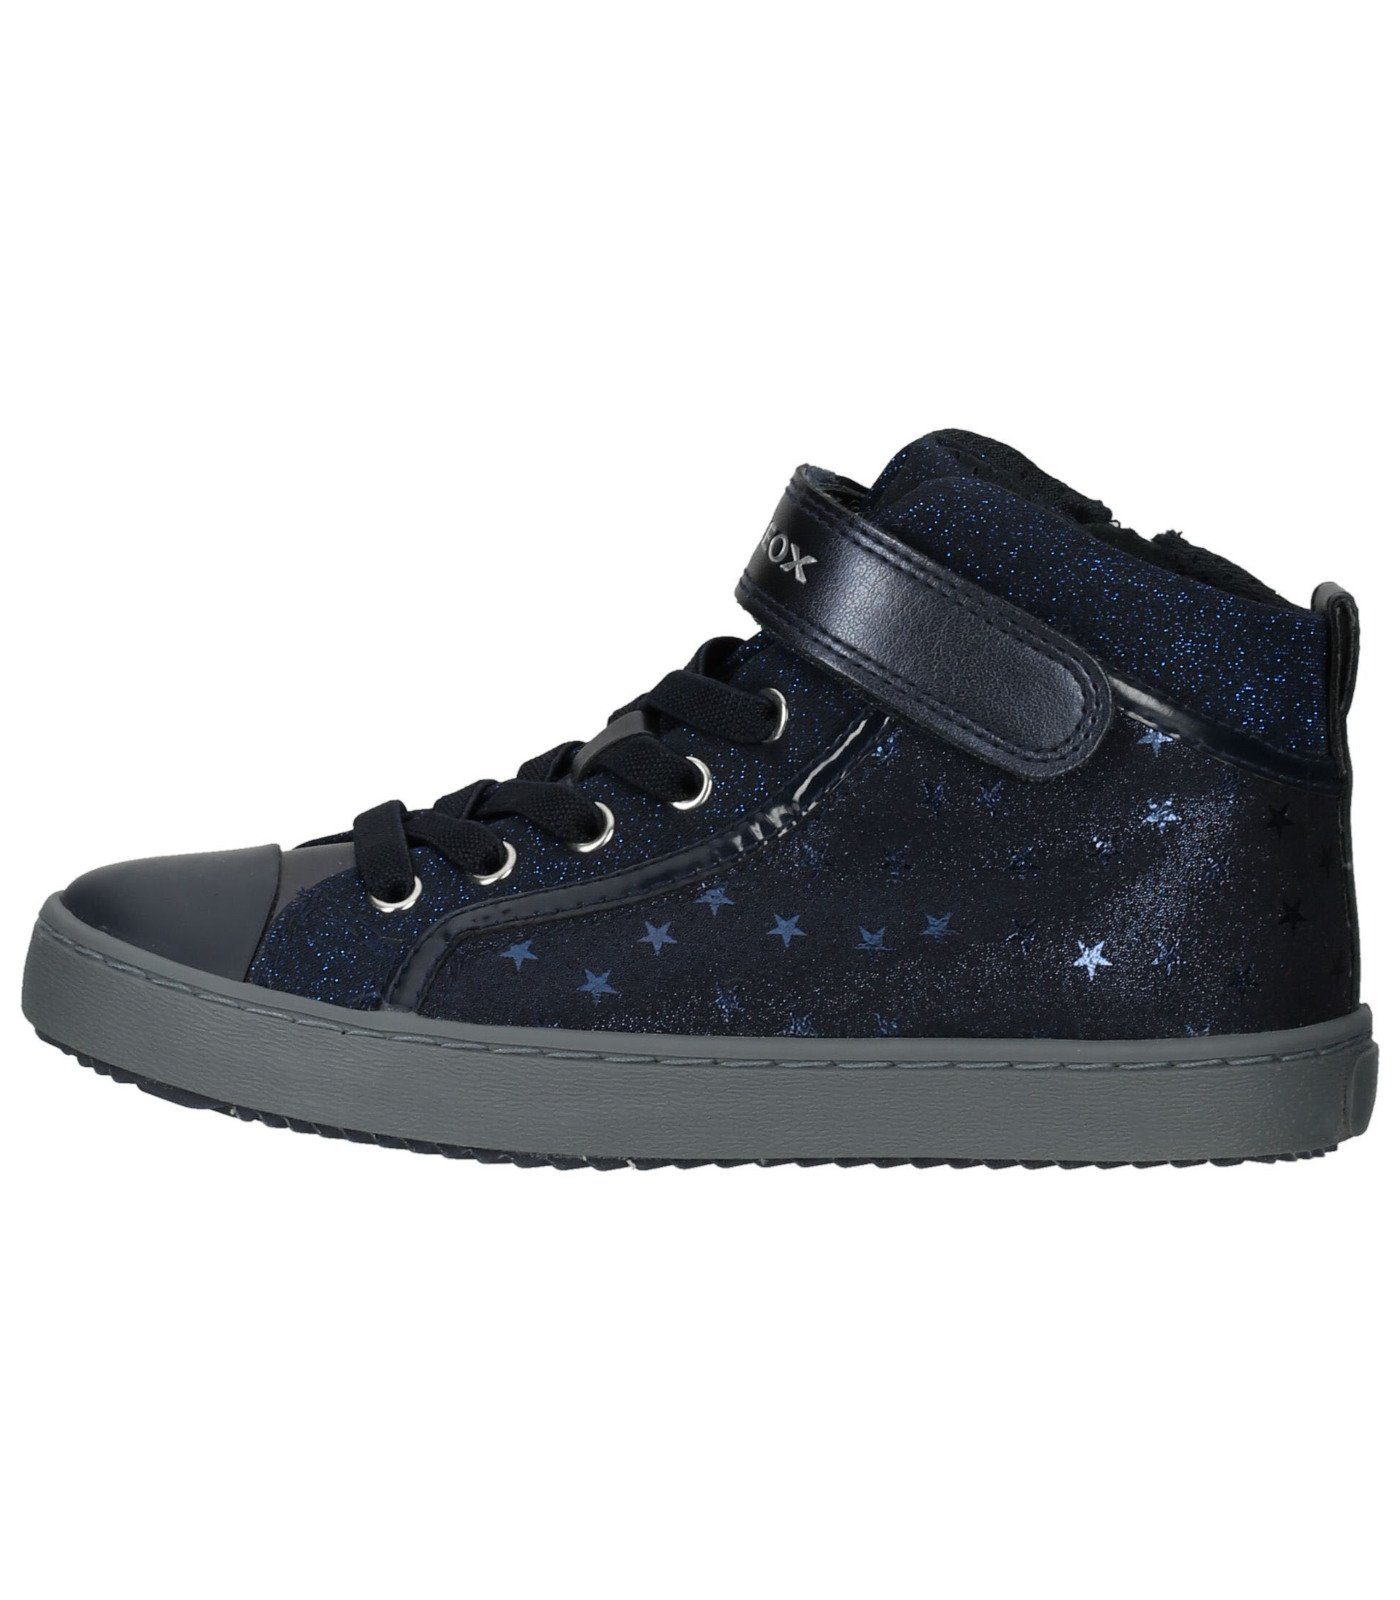 Blau Lederimitat Geox Sneaker Sneaker